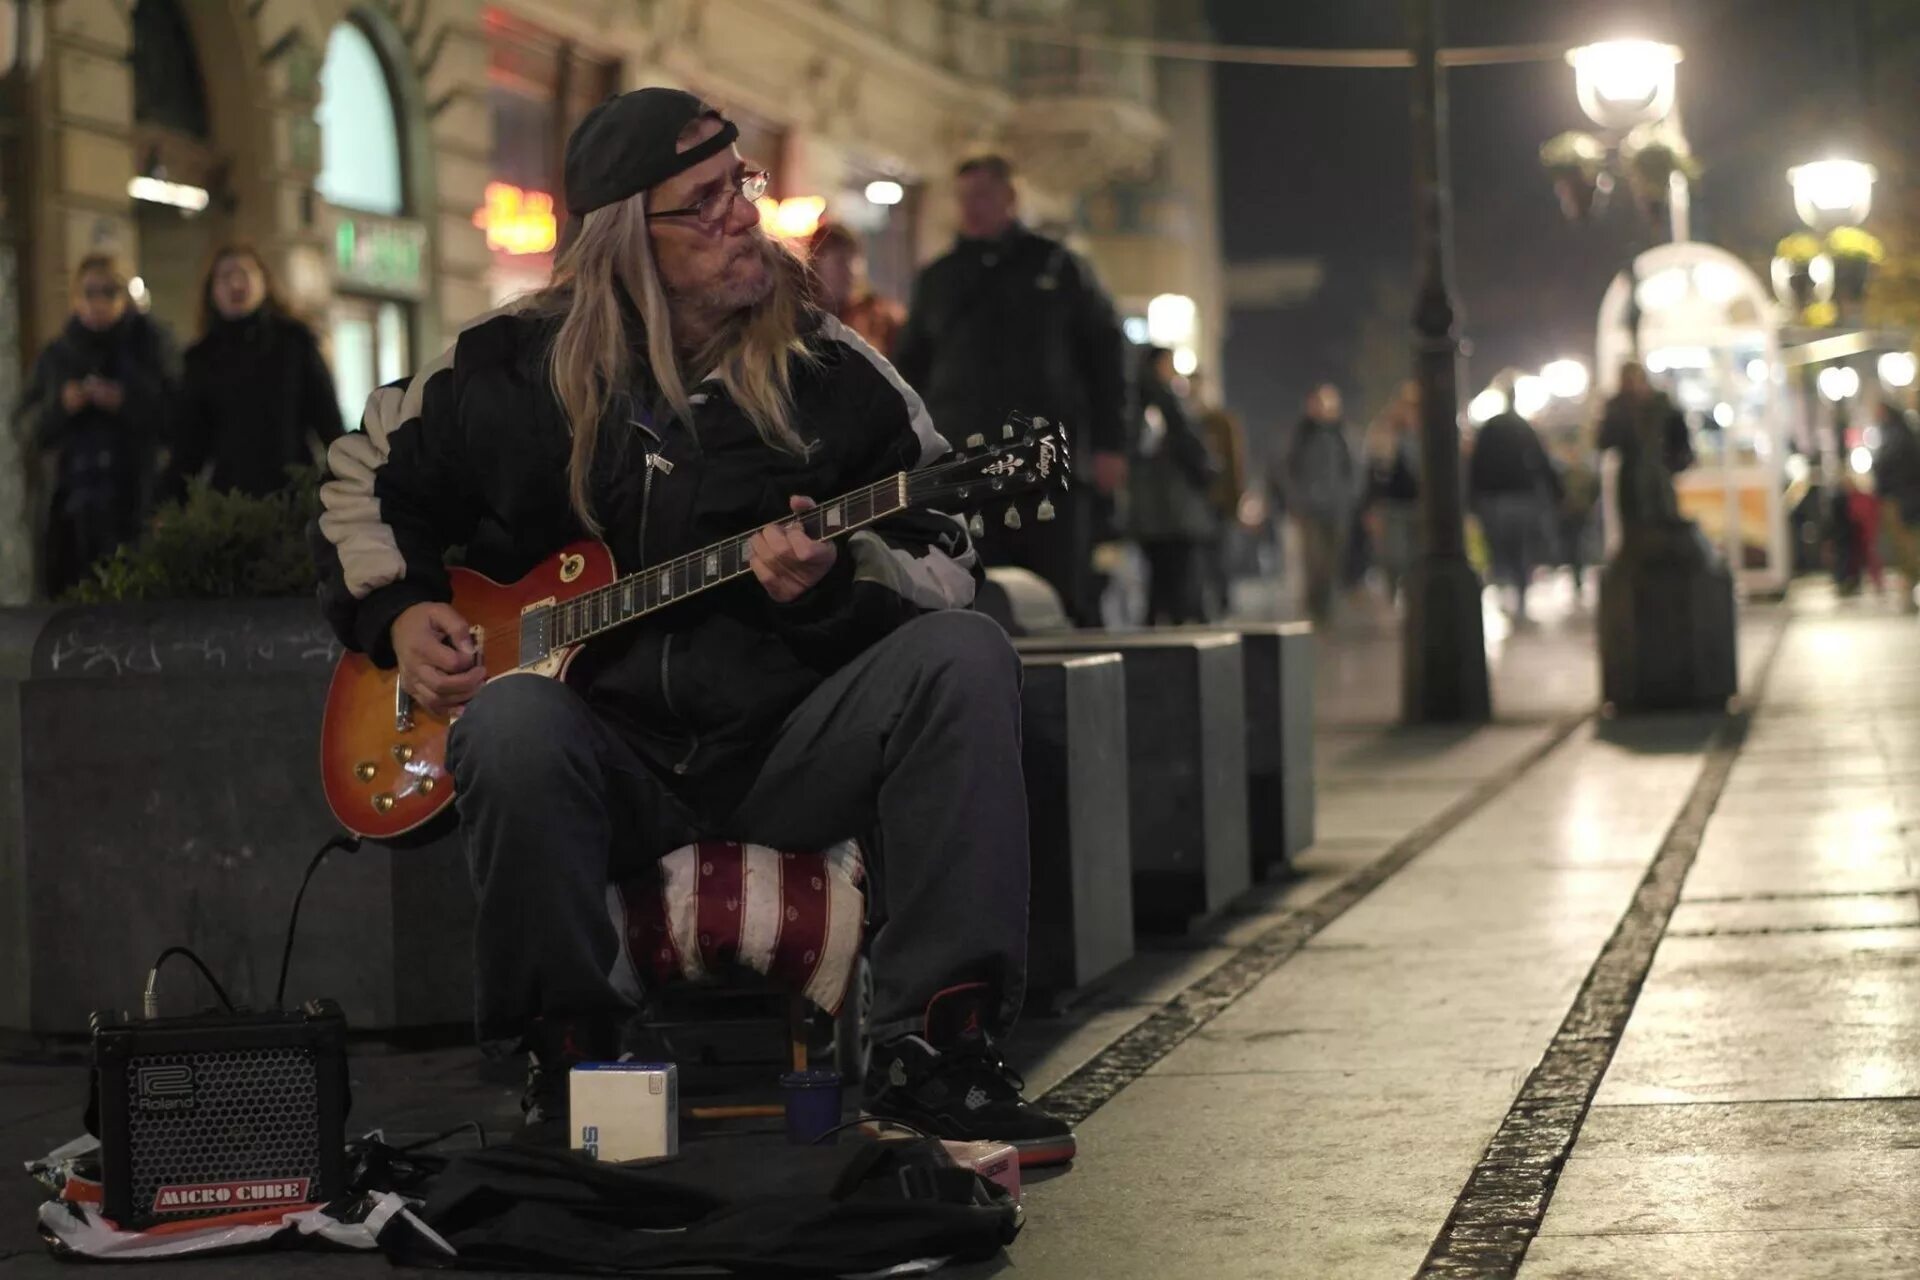 «Уличный музыкант» Street musician, Бенгт Линдстрём. "Гитарист" "уличный музыкант" "Ambient". Уличный гитарист. Уличный музыкант на гитаре. Поют на гитаре на улицах